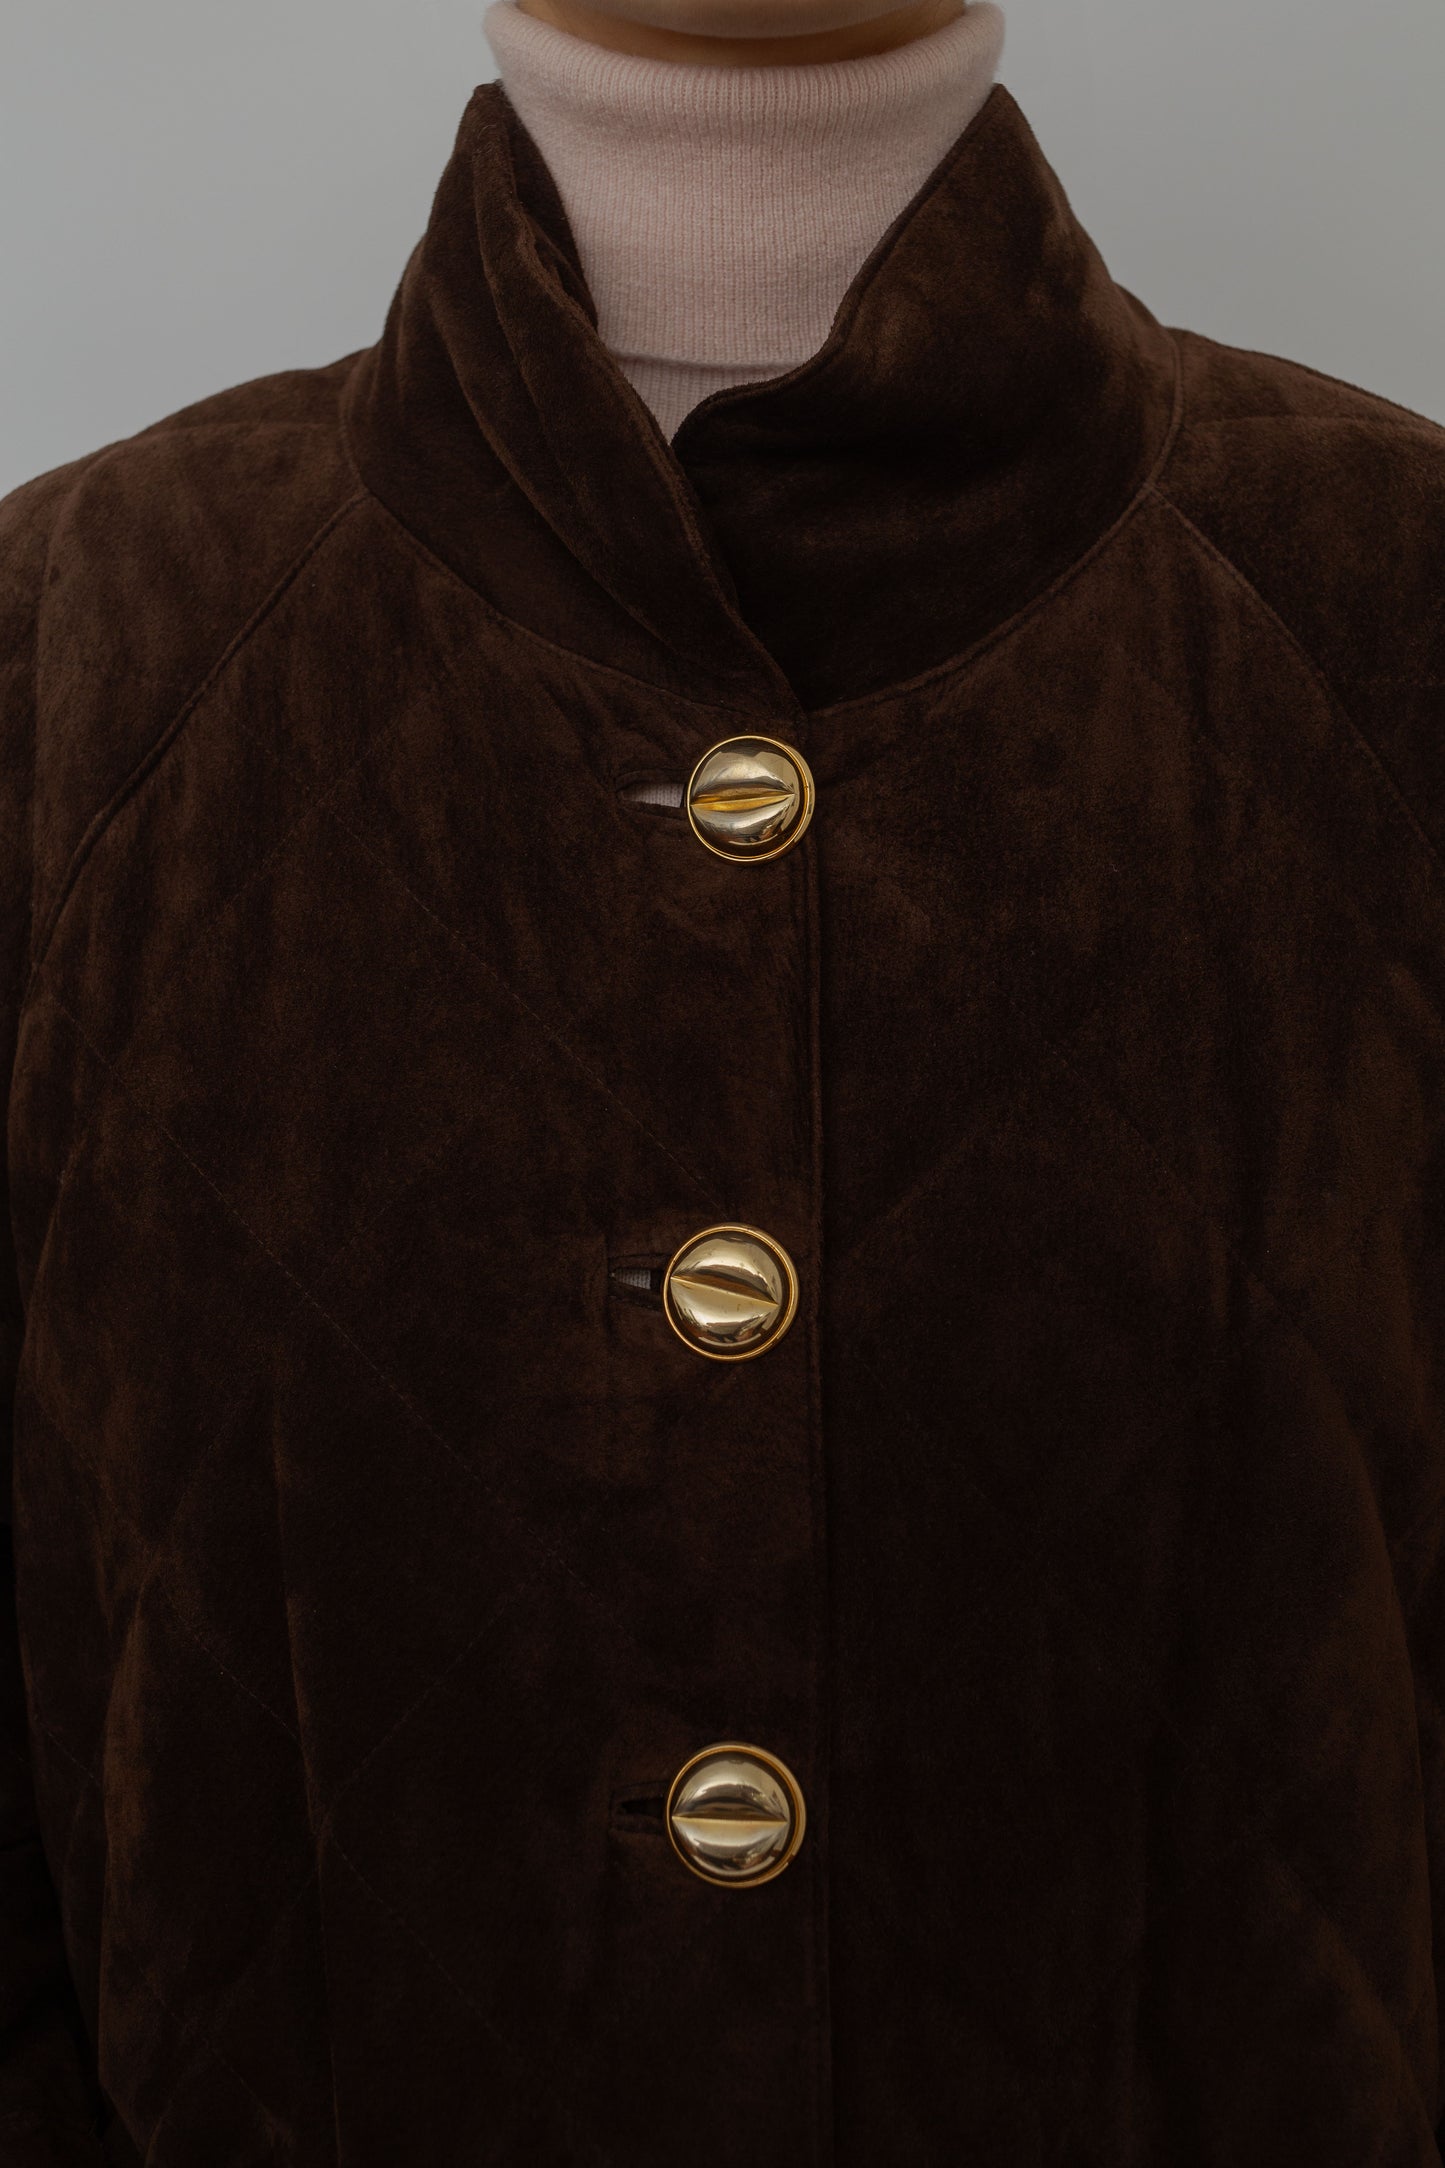 Vintage quilted suede Jacket